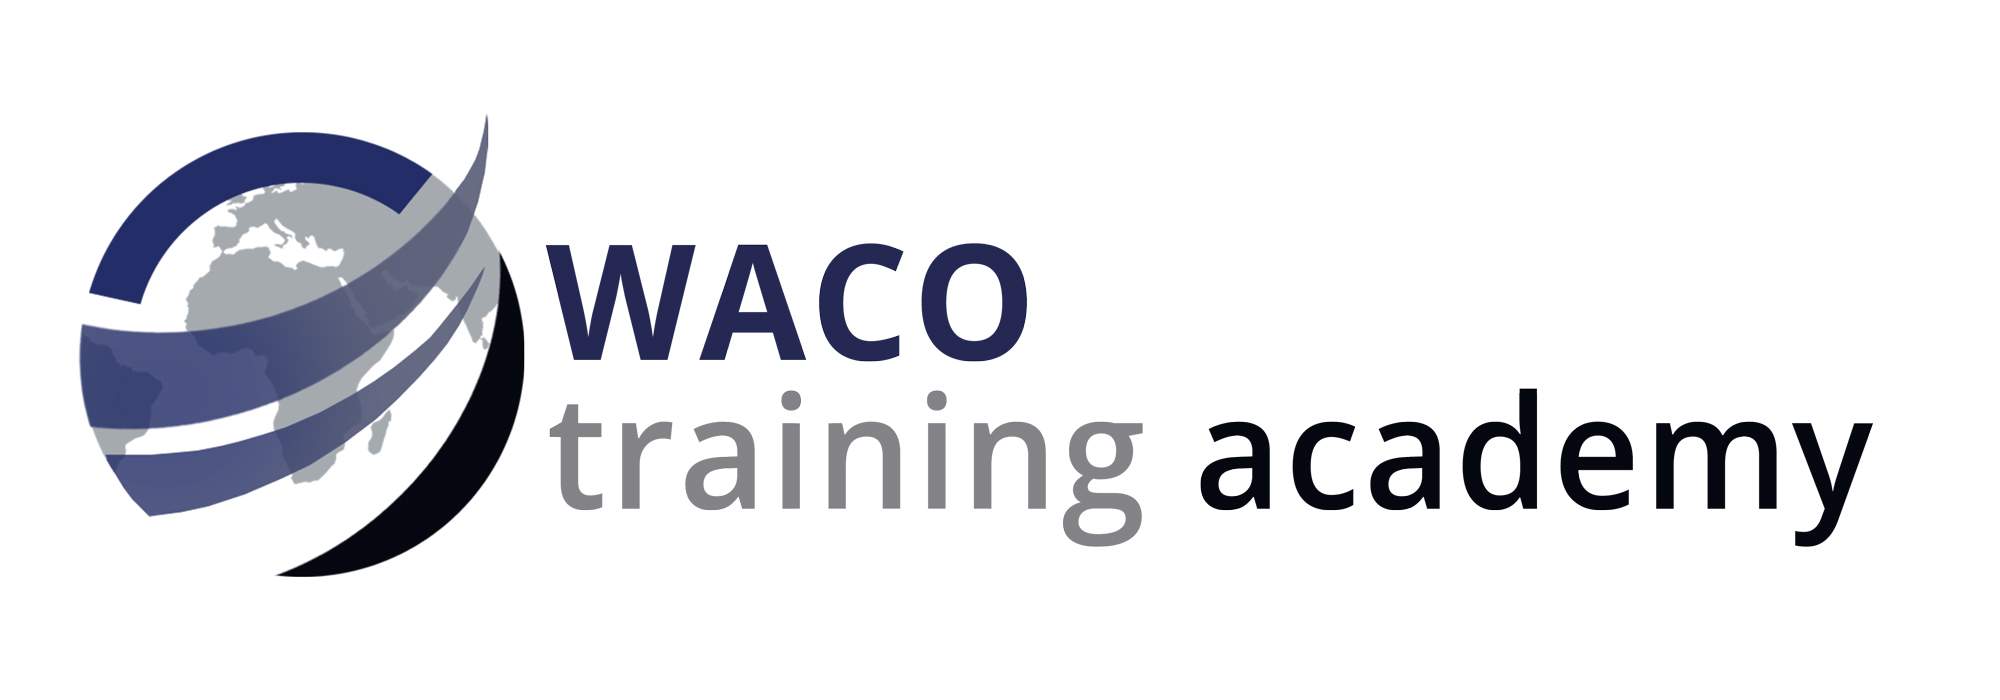 Waco Training Academy Logo